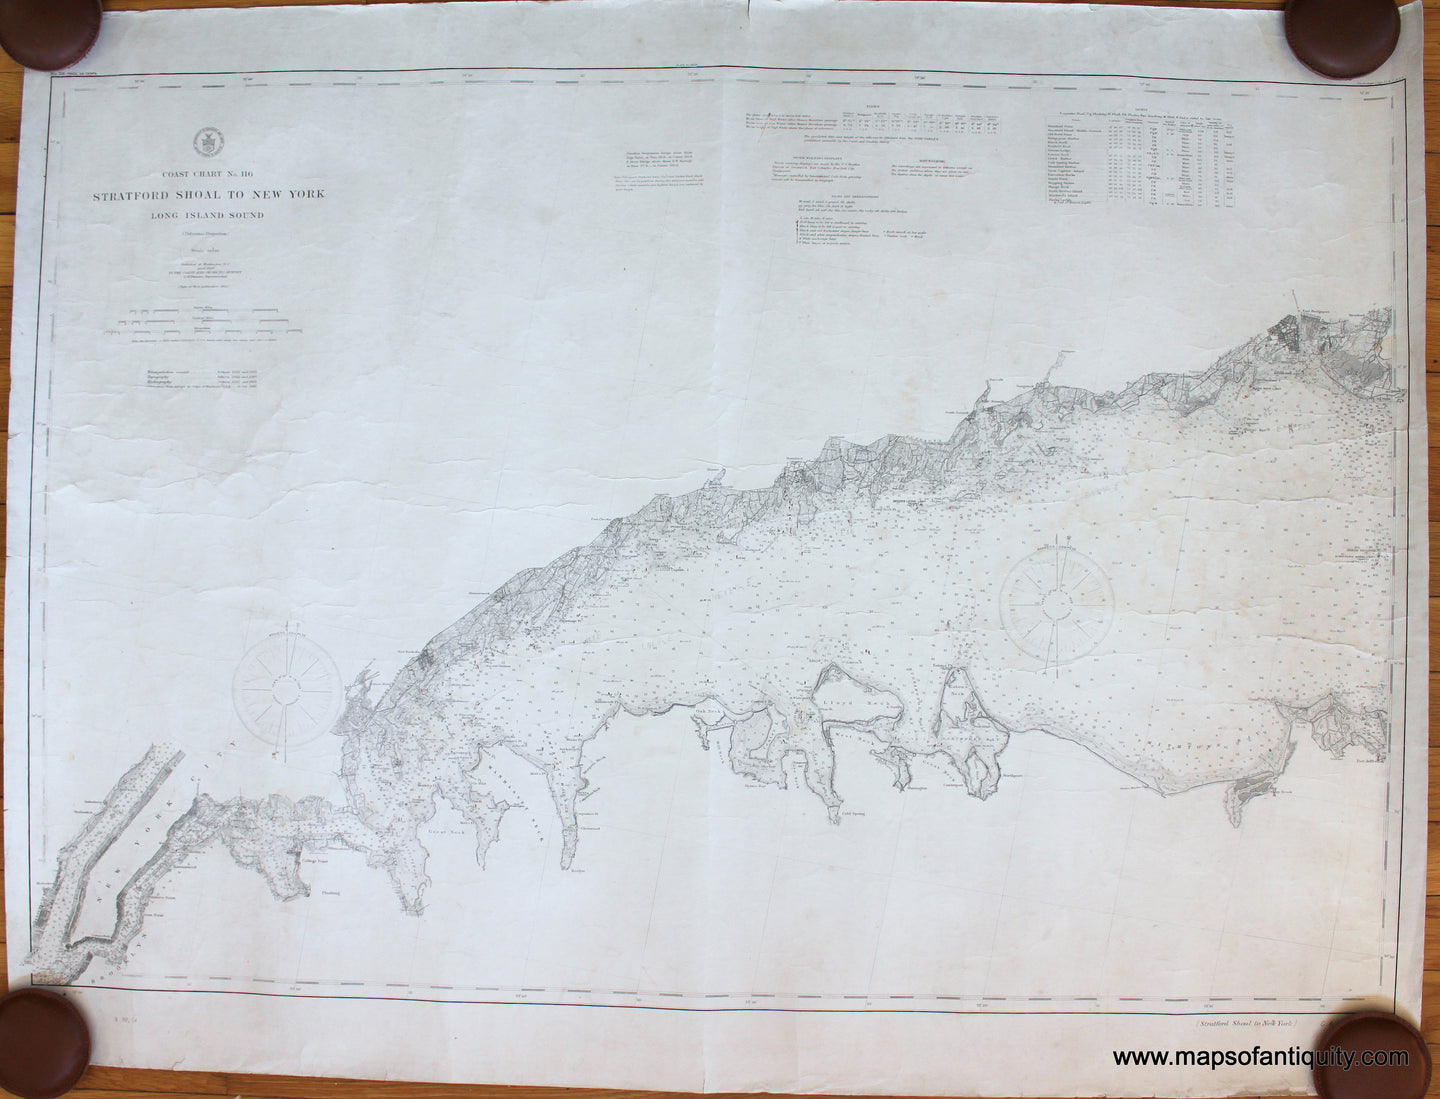 Antique-Nautical-Chart-Coast-Chart-116.-Stratford-Shoal-to-New-York-Long-Island-Sound-**********-Nautical-Charts--1906-USC&GS-Maps-Of-Antiquity